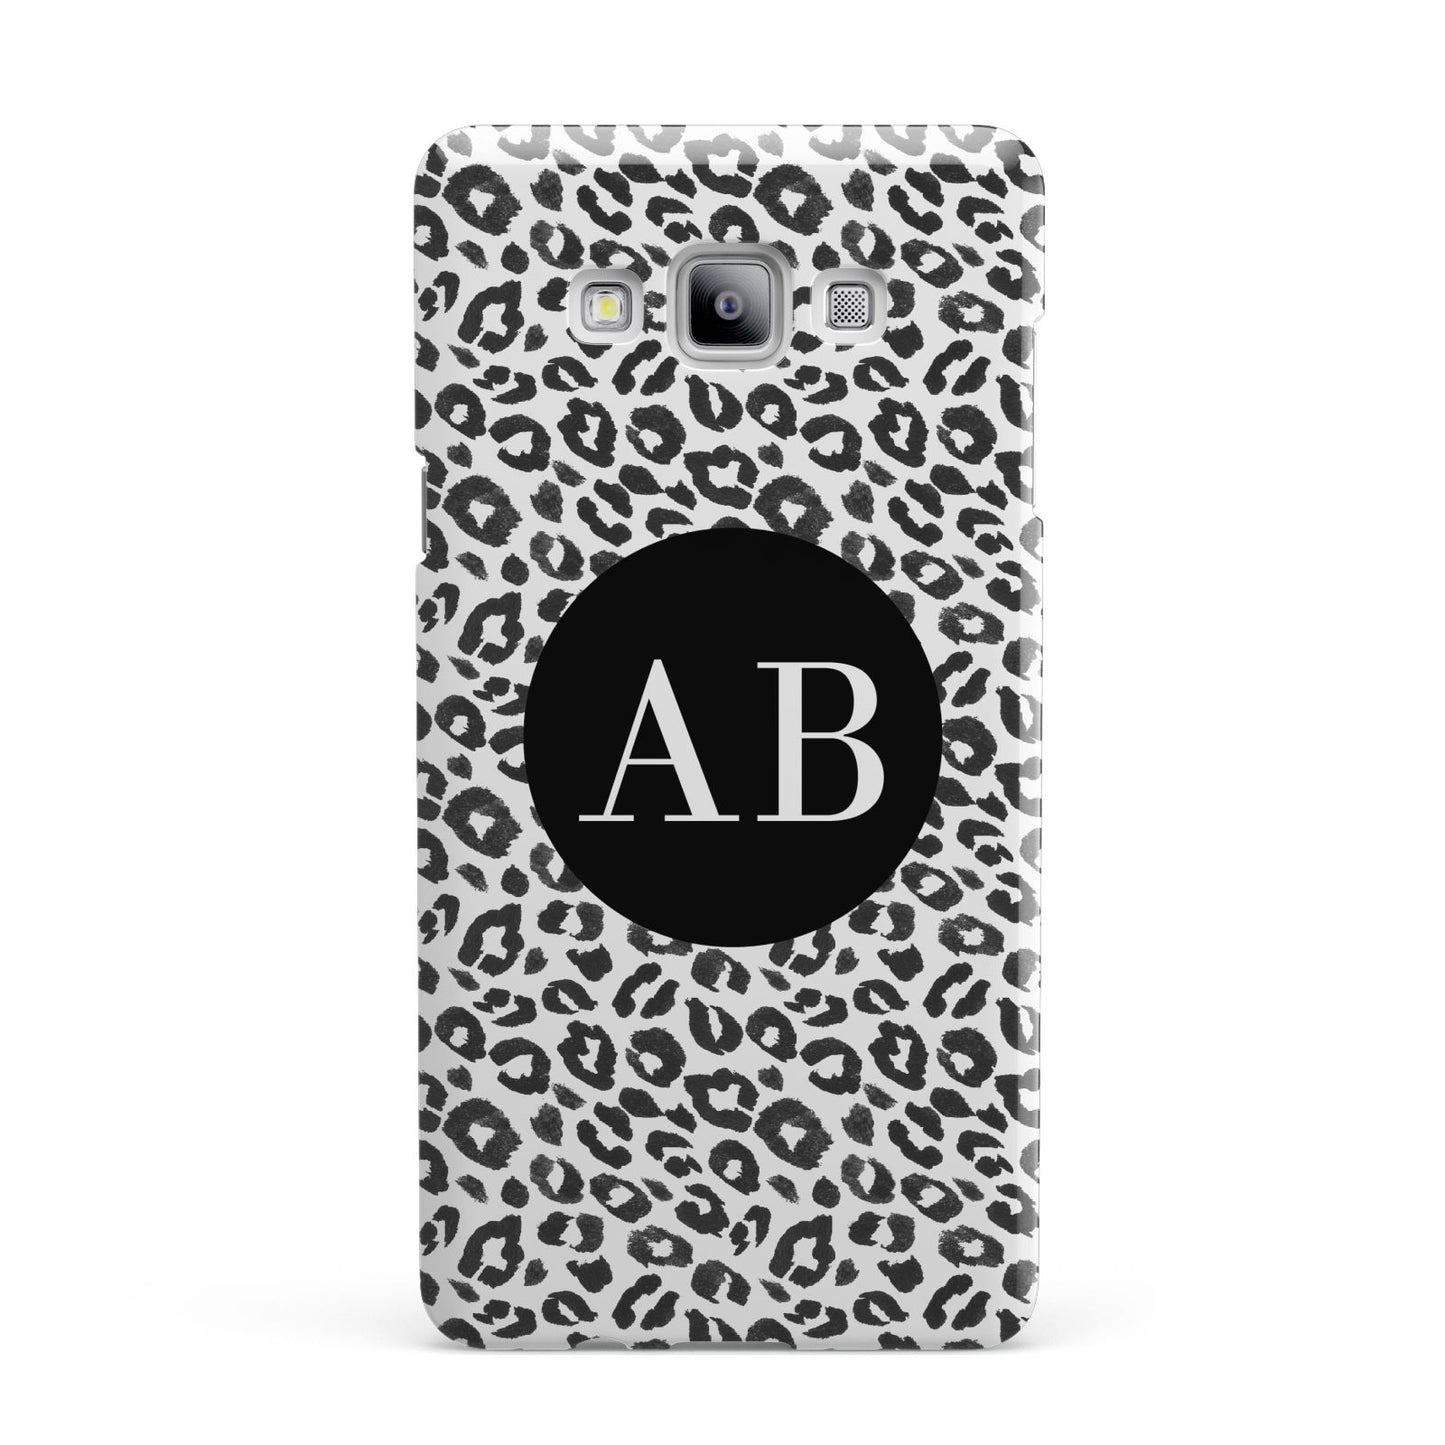 Leopard Print Black and White Samsung Galaxy A7 2015 Case